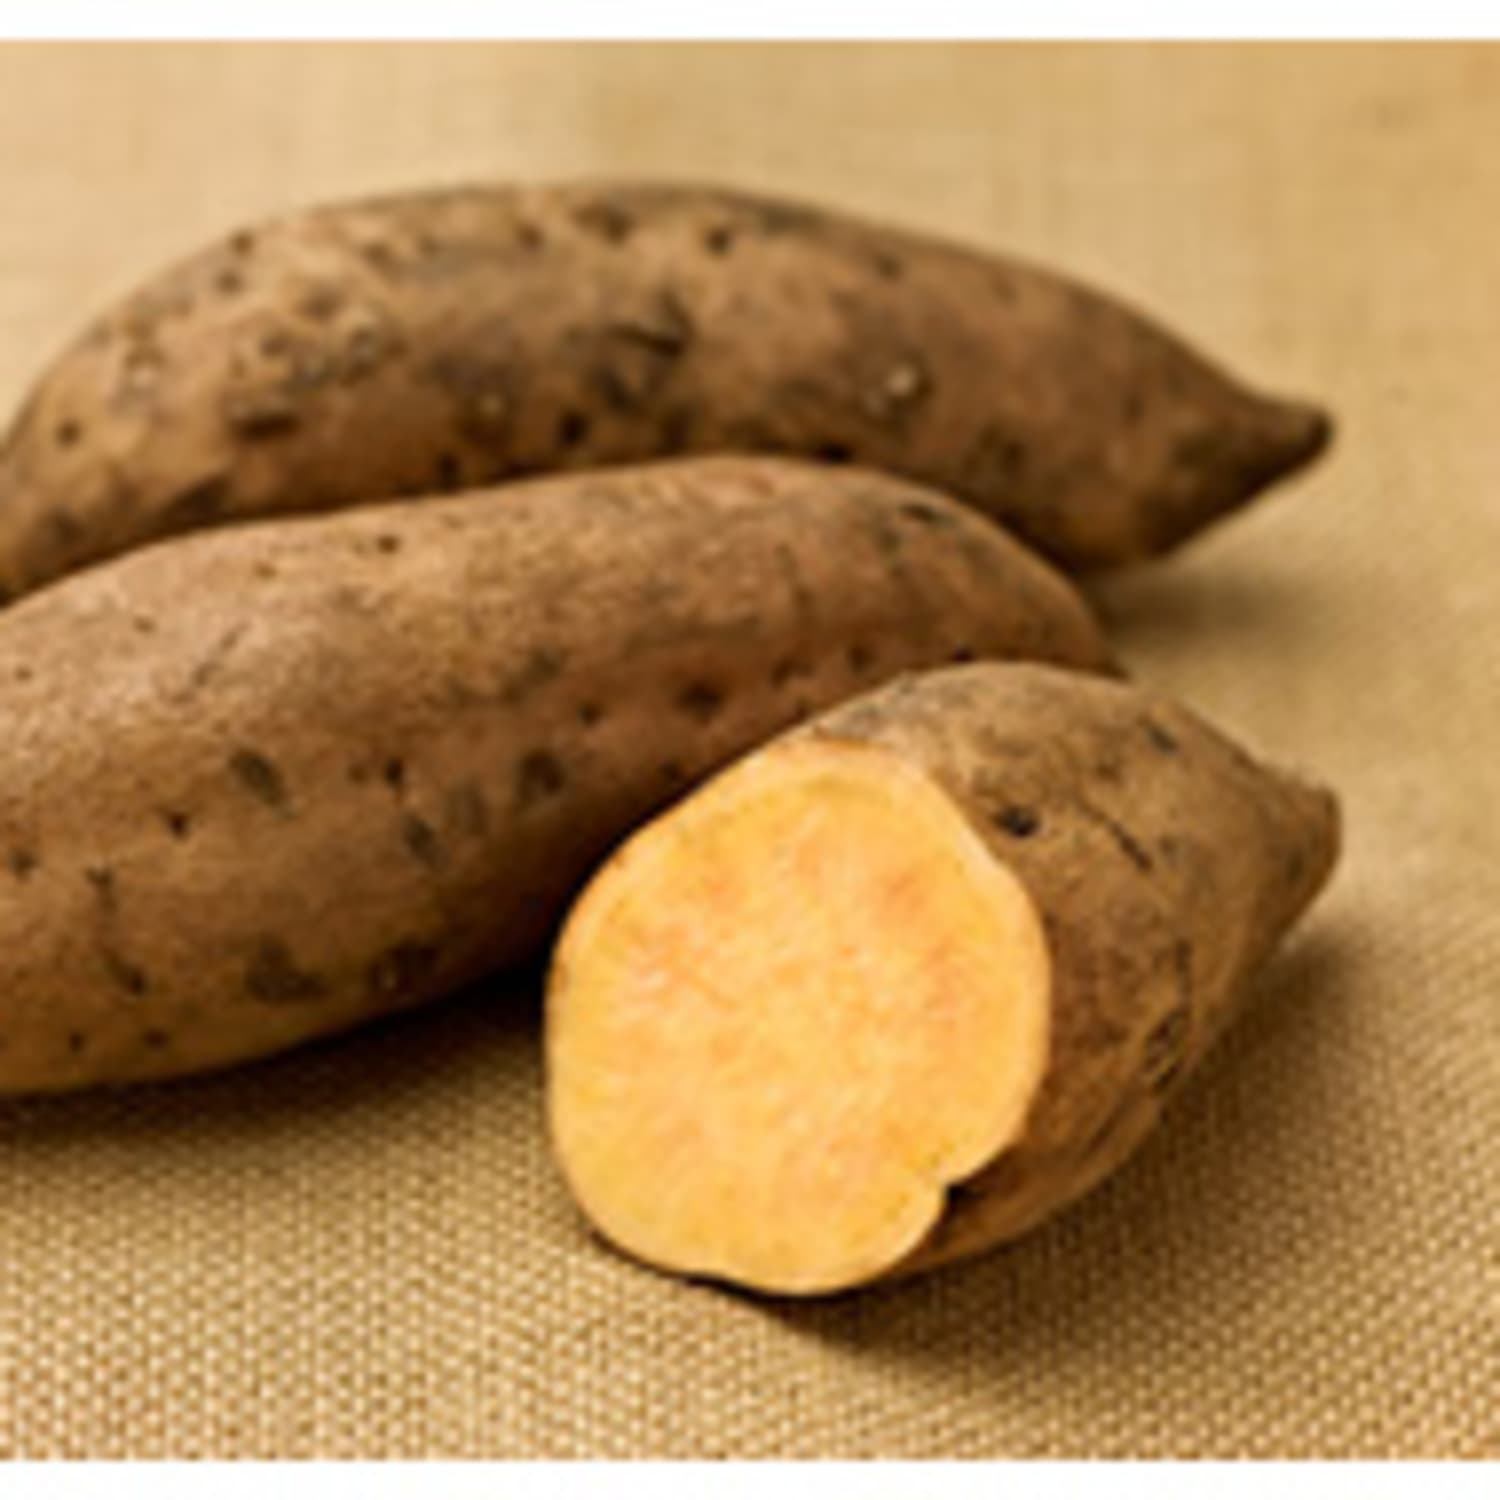 How to Cut a Sweet Potato